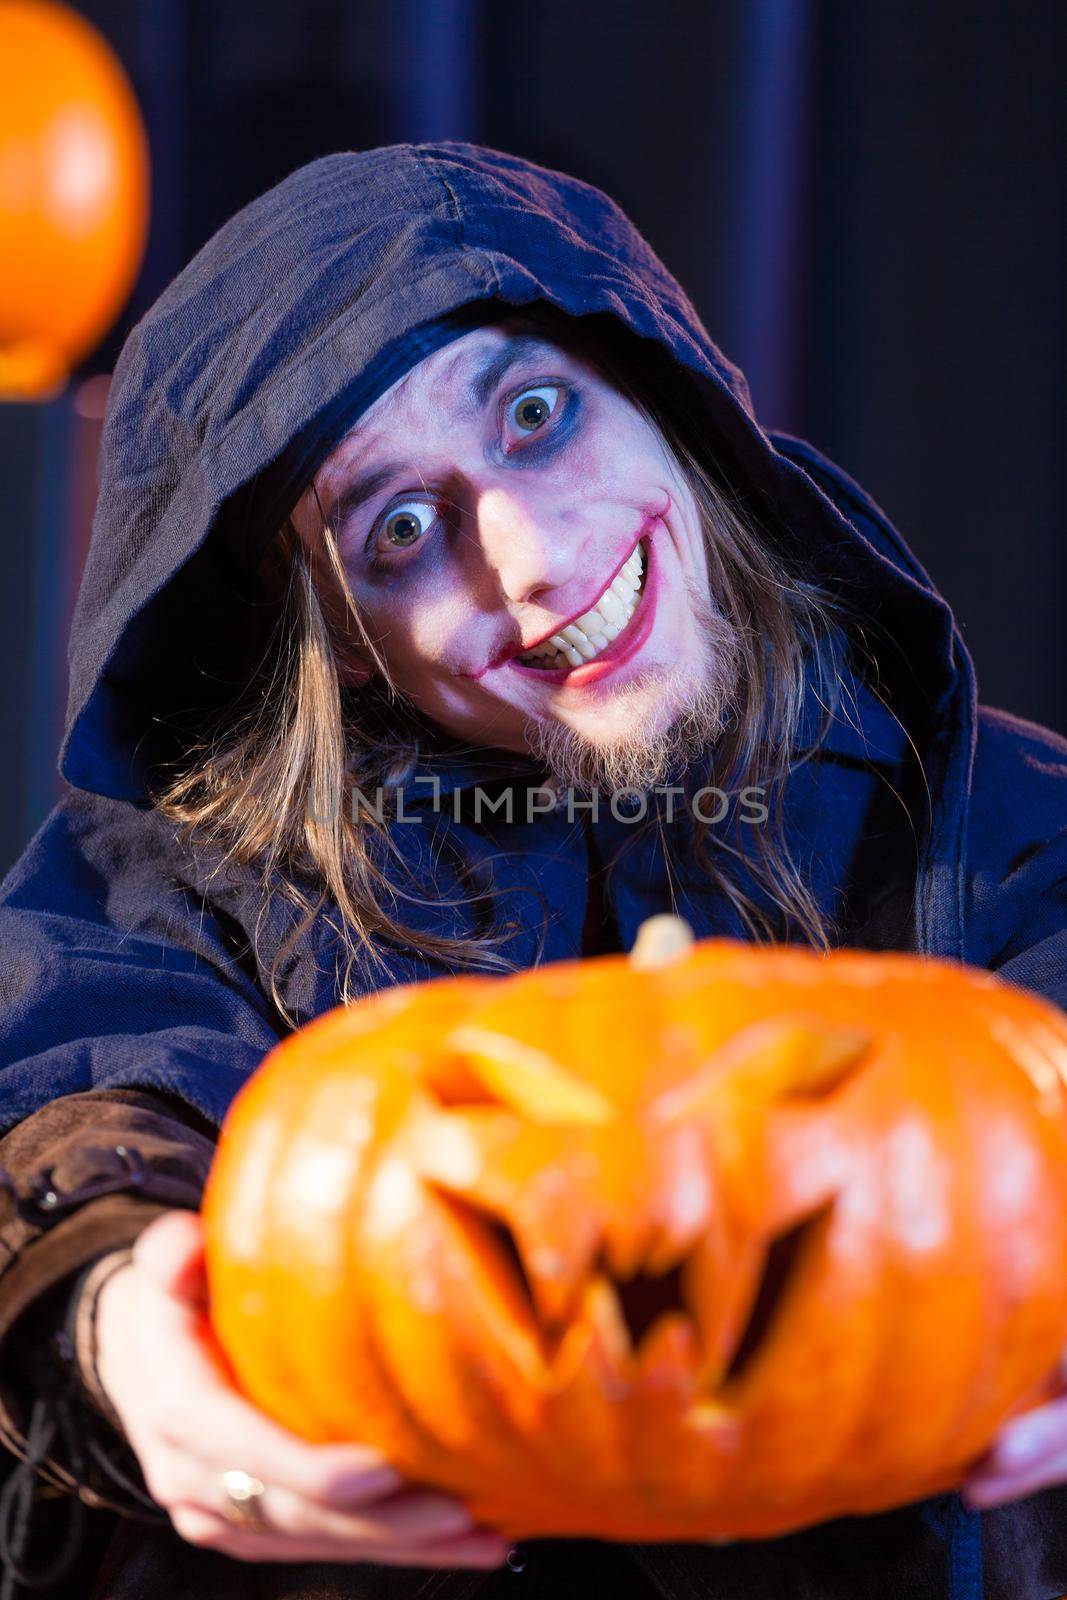 Man in scary Halloween costume holding pumpkin by Kzenon